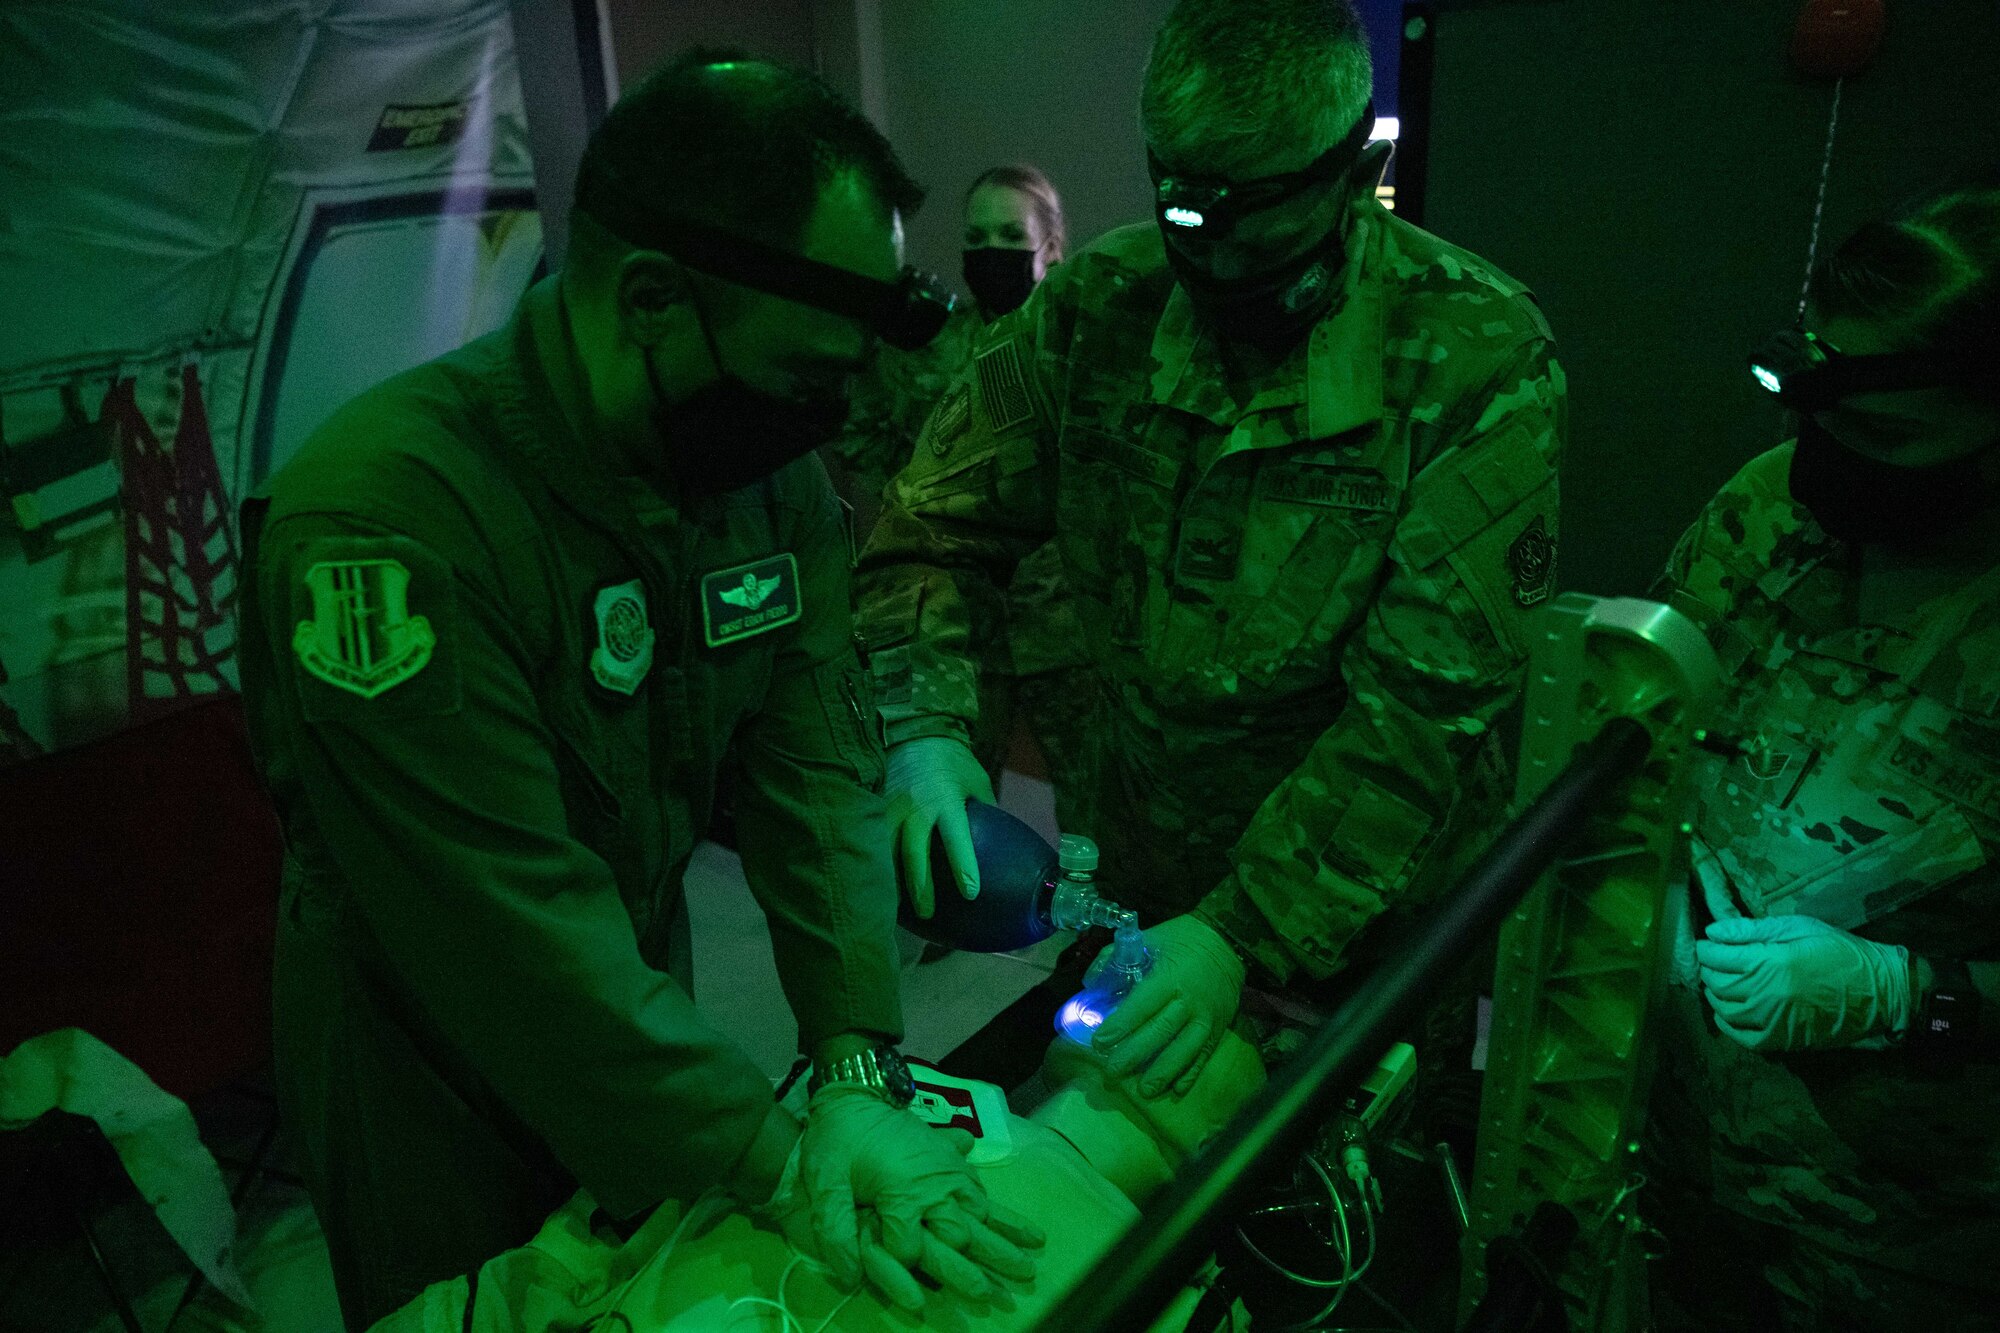 Airmen training in an aeromedical evacuation simulator room